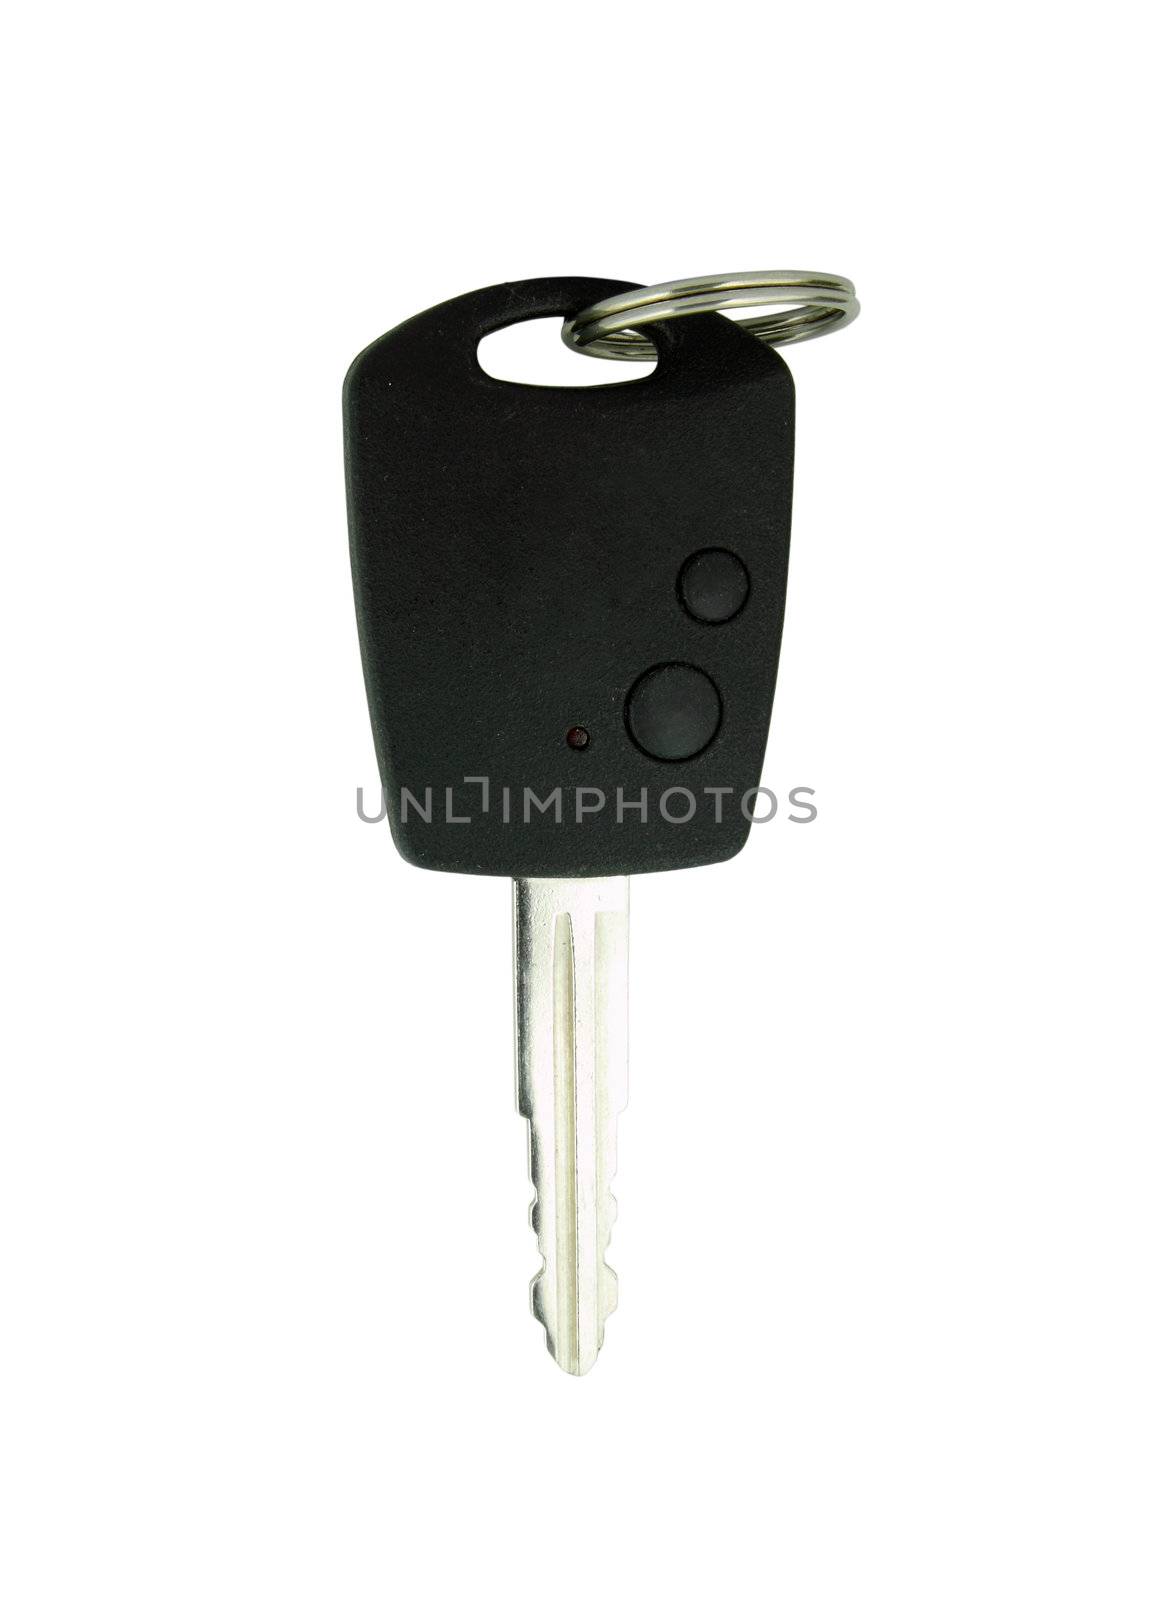 car key remote control on white